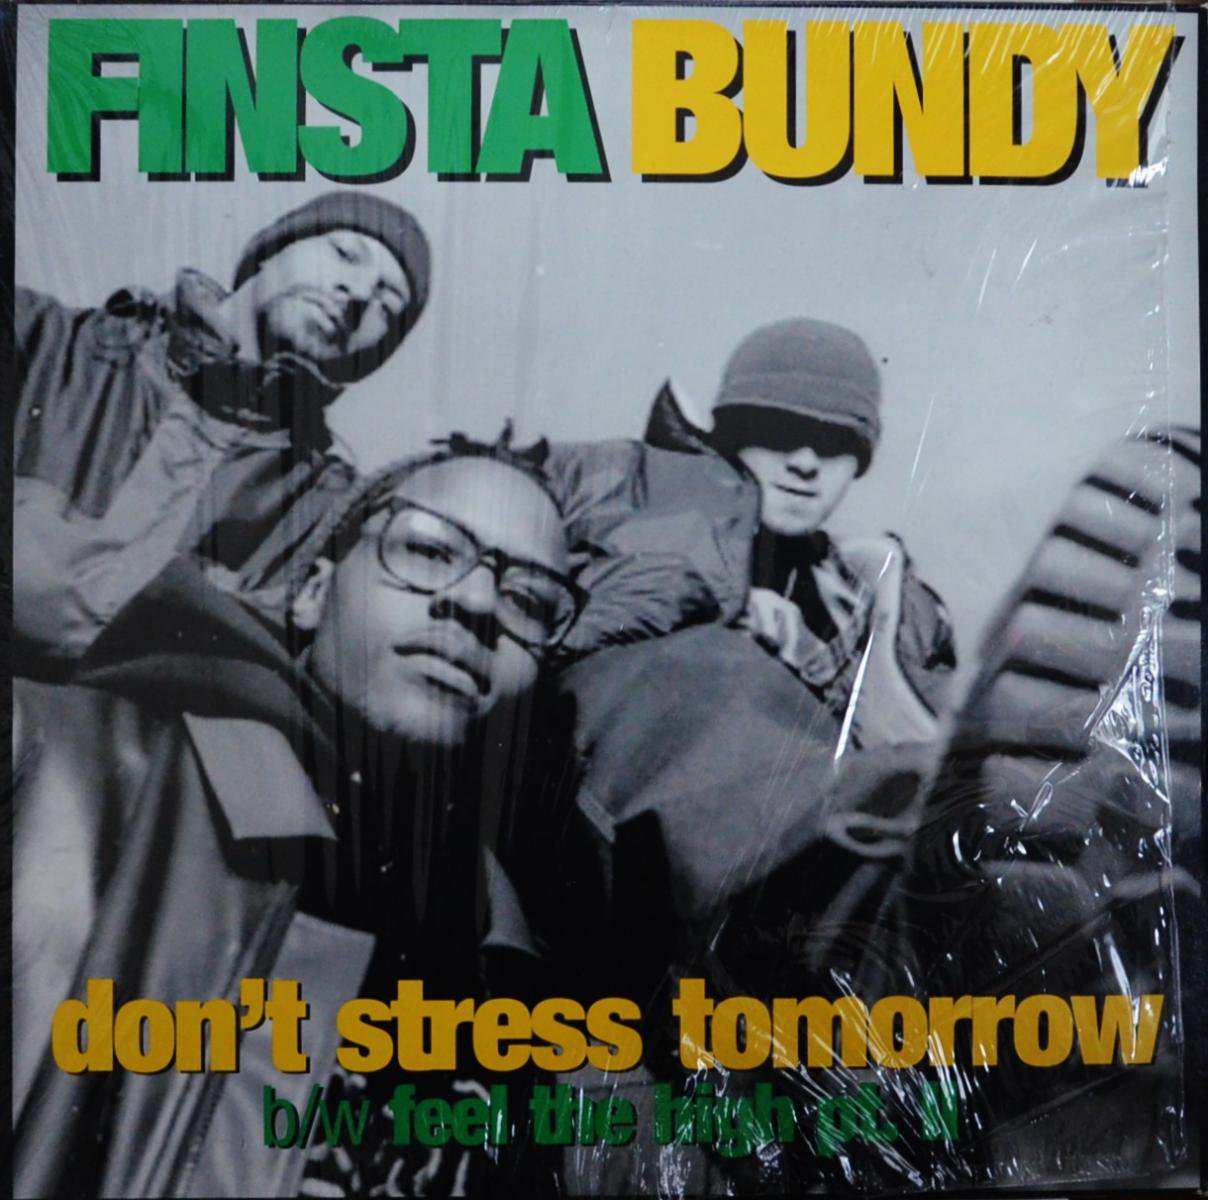 FINSTA BUNDY / DON'T STRESS TOMORROW (12